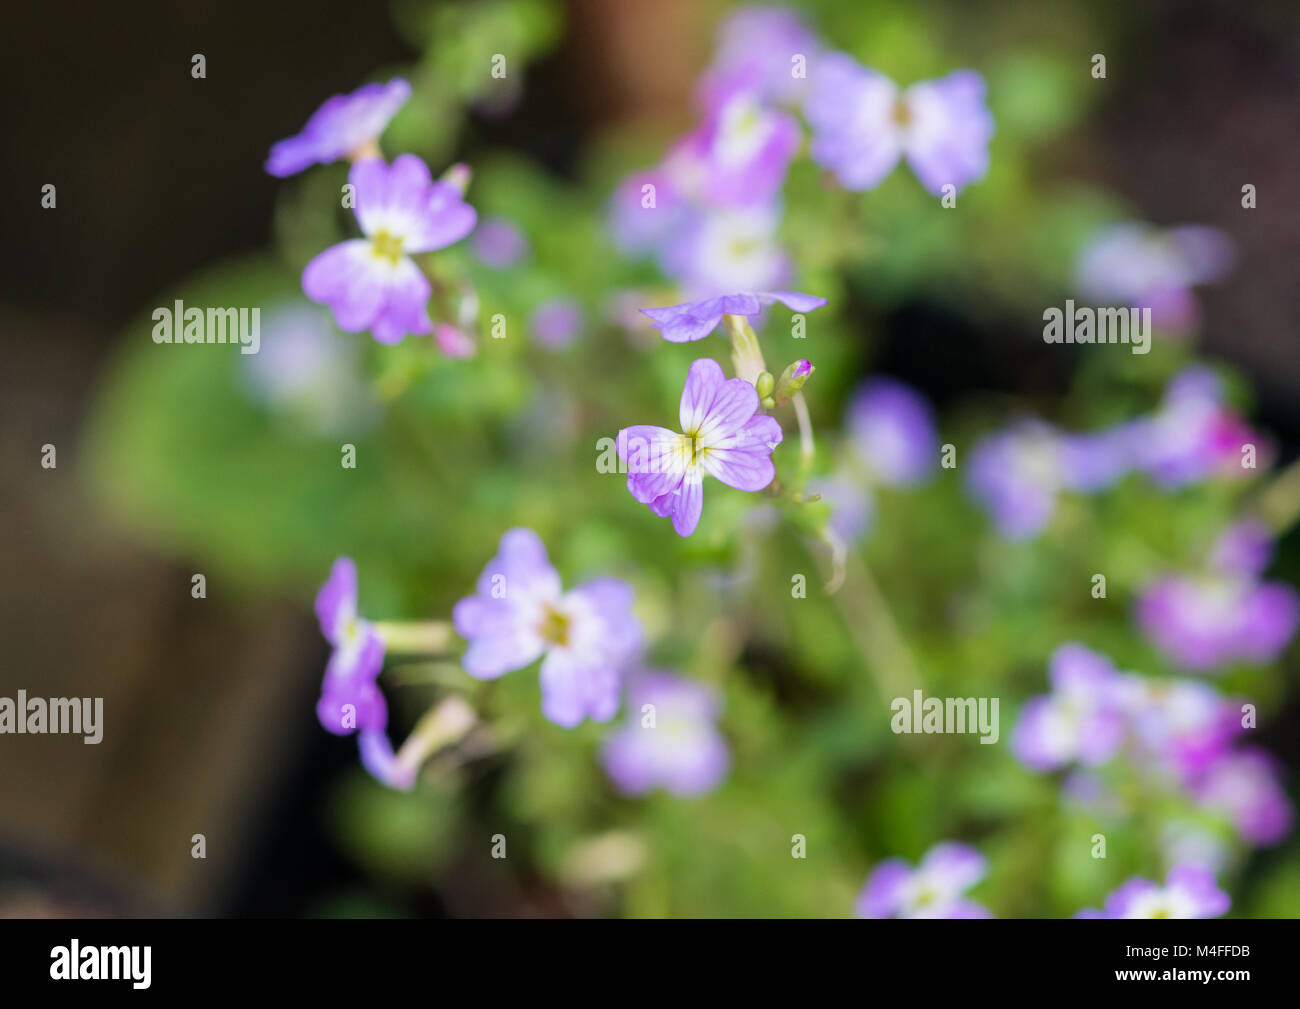 A macro shot of some virginia stock flowers. Stock Photo